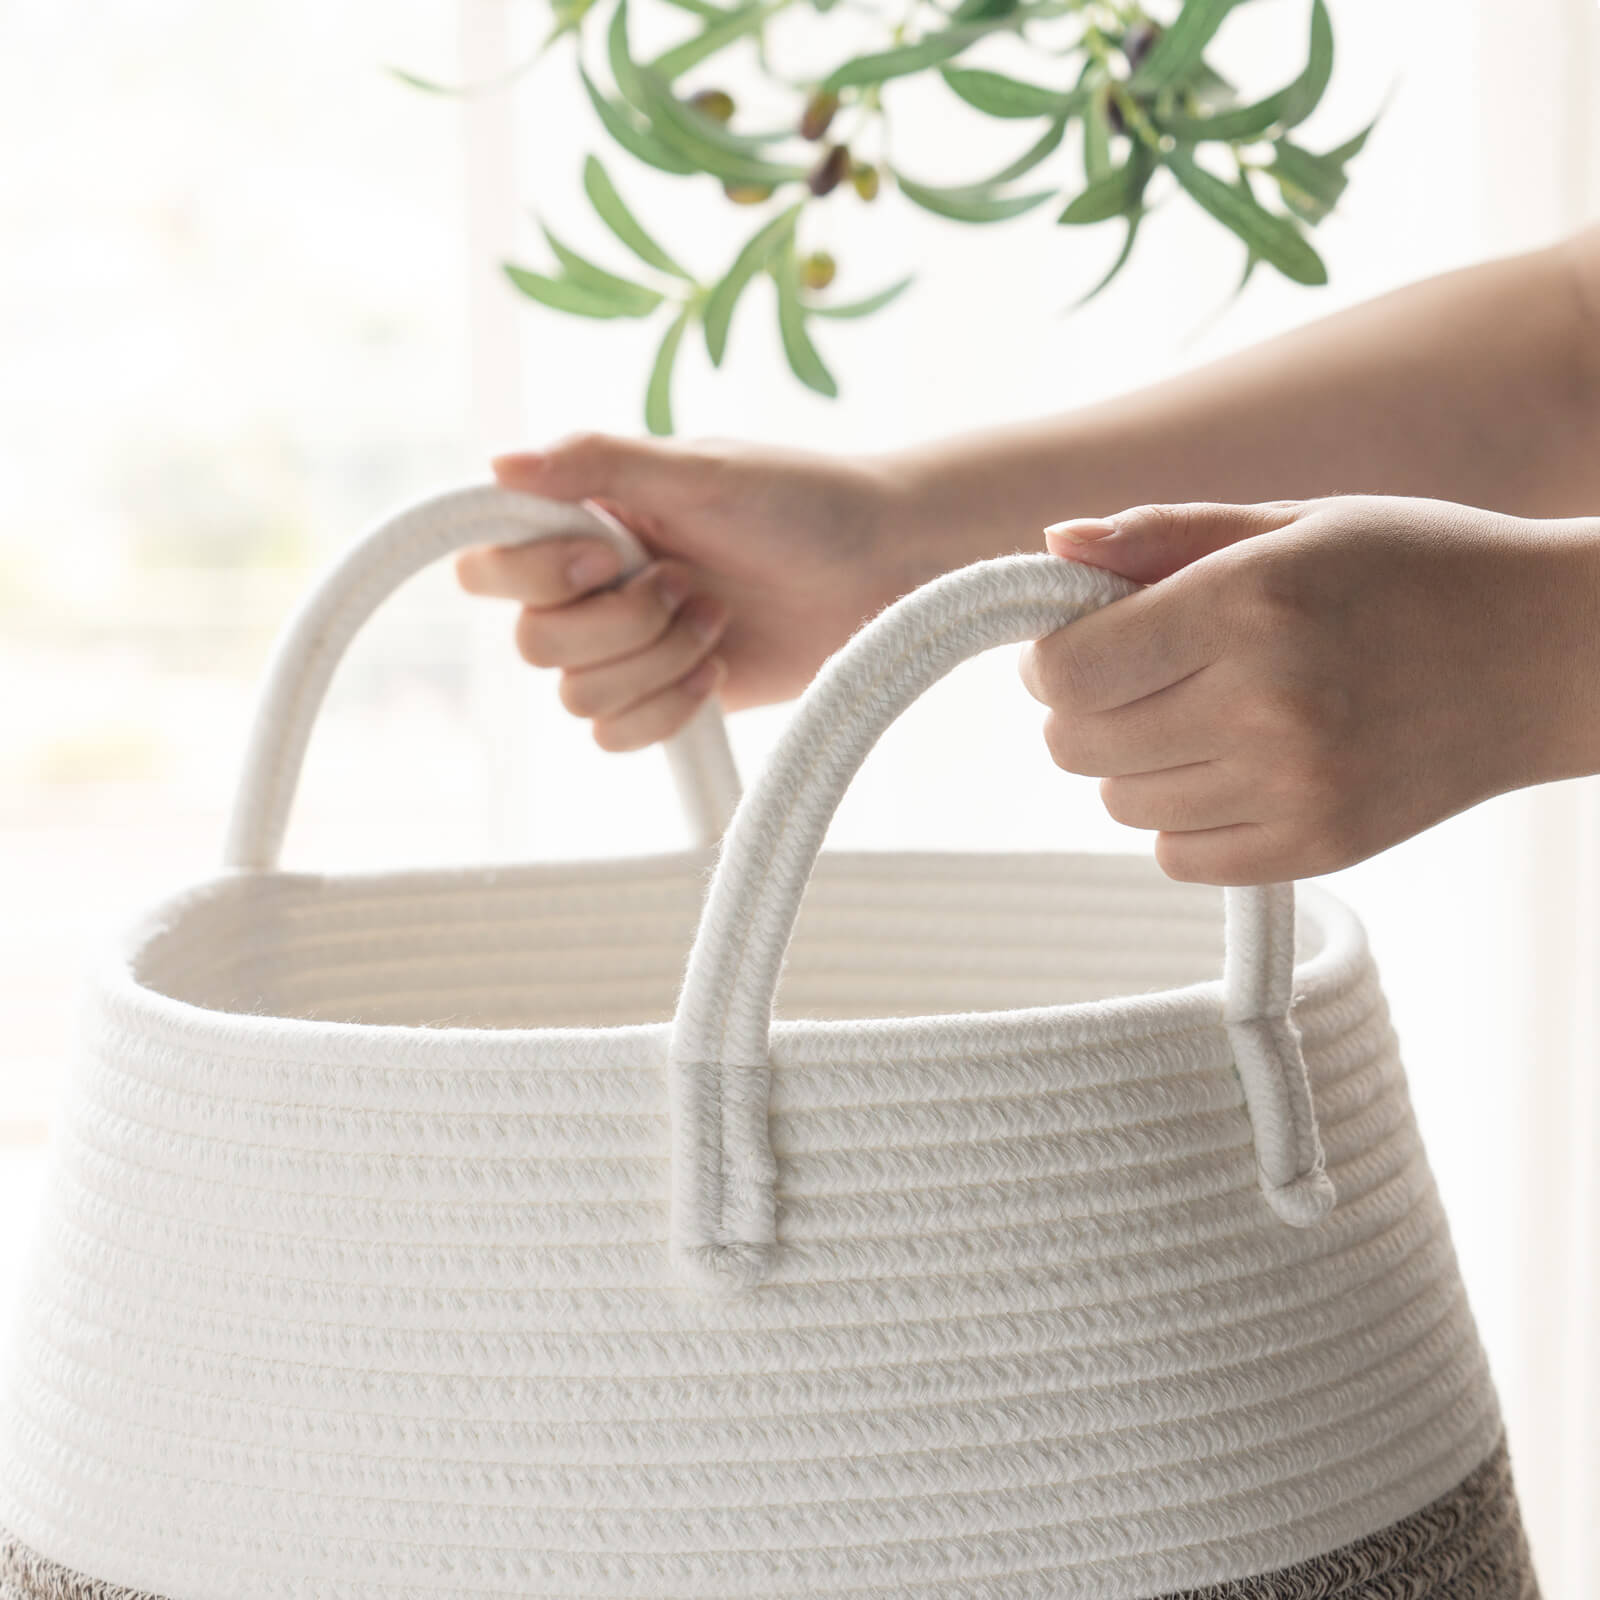 Goodpick Large Rope Laundry Basket with Handles